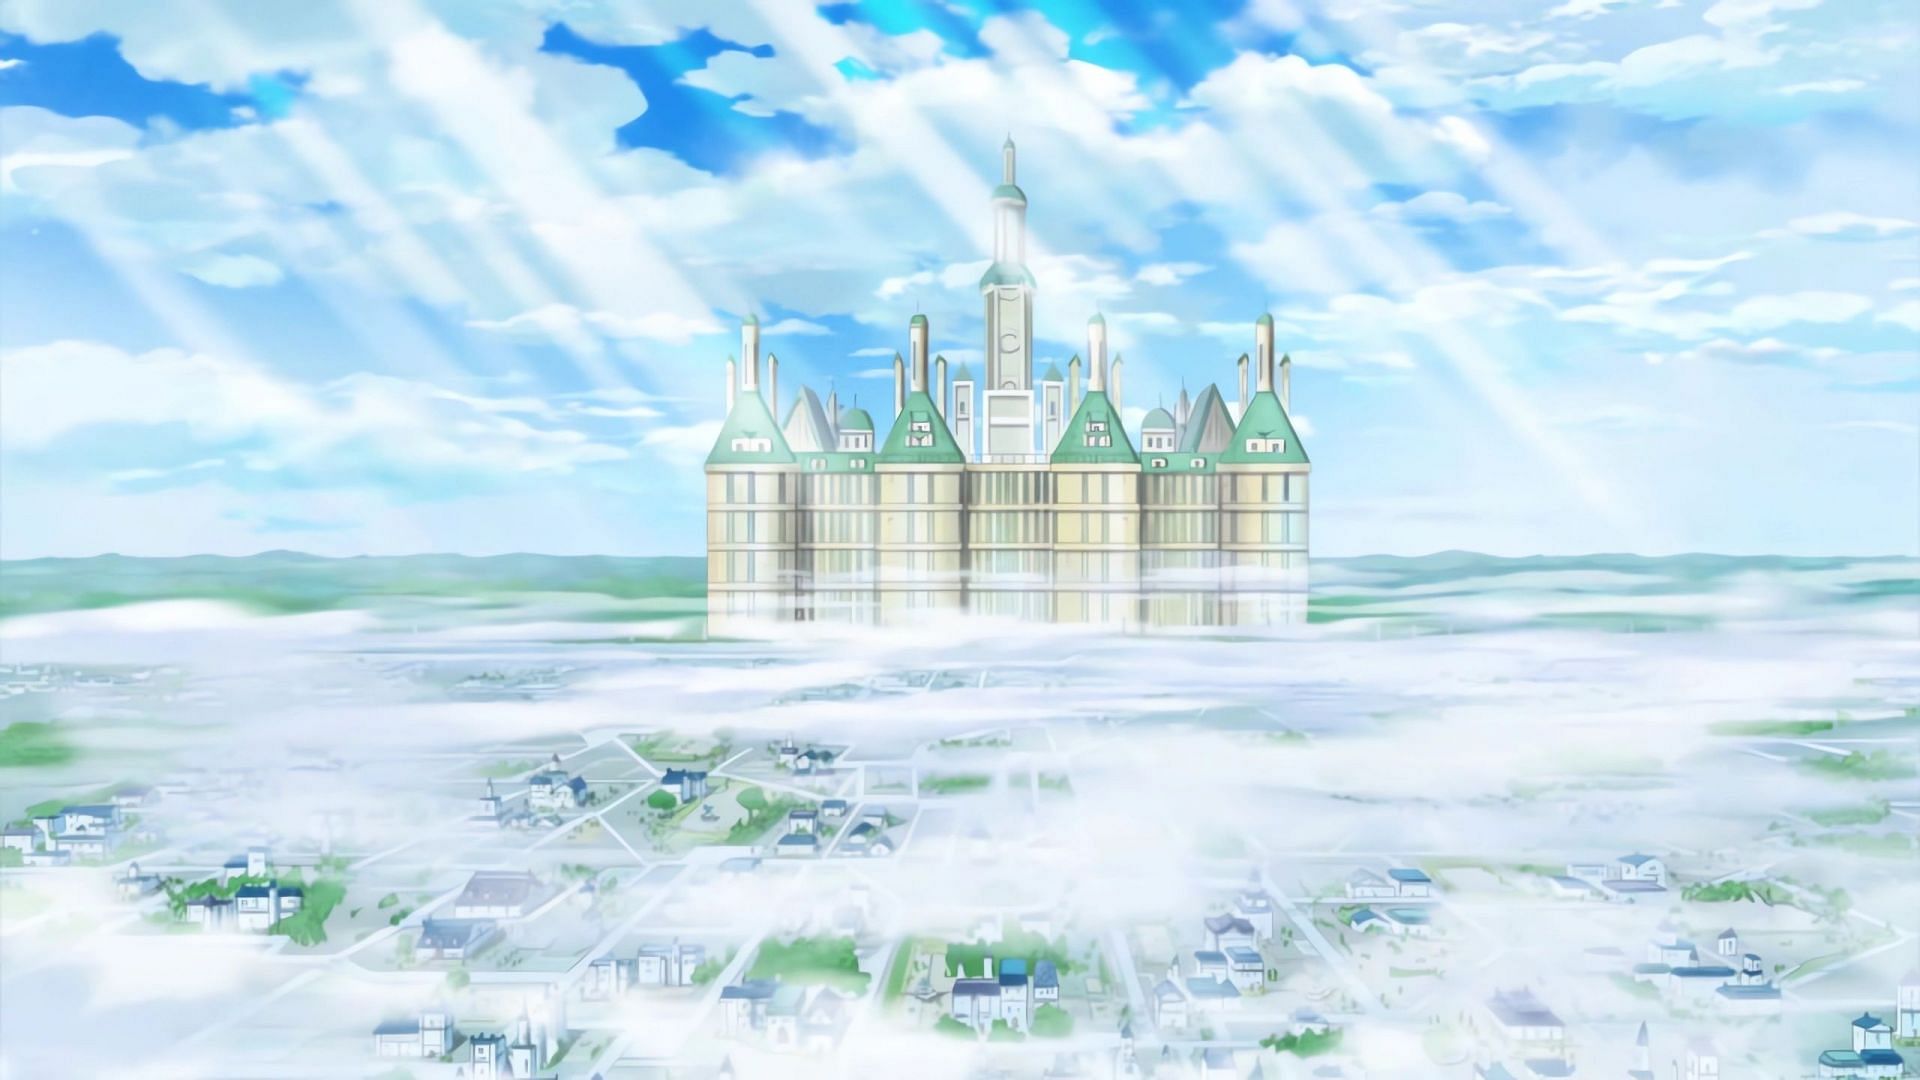 The holy land of Mary Geoise (Image via Toei Animation)